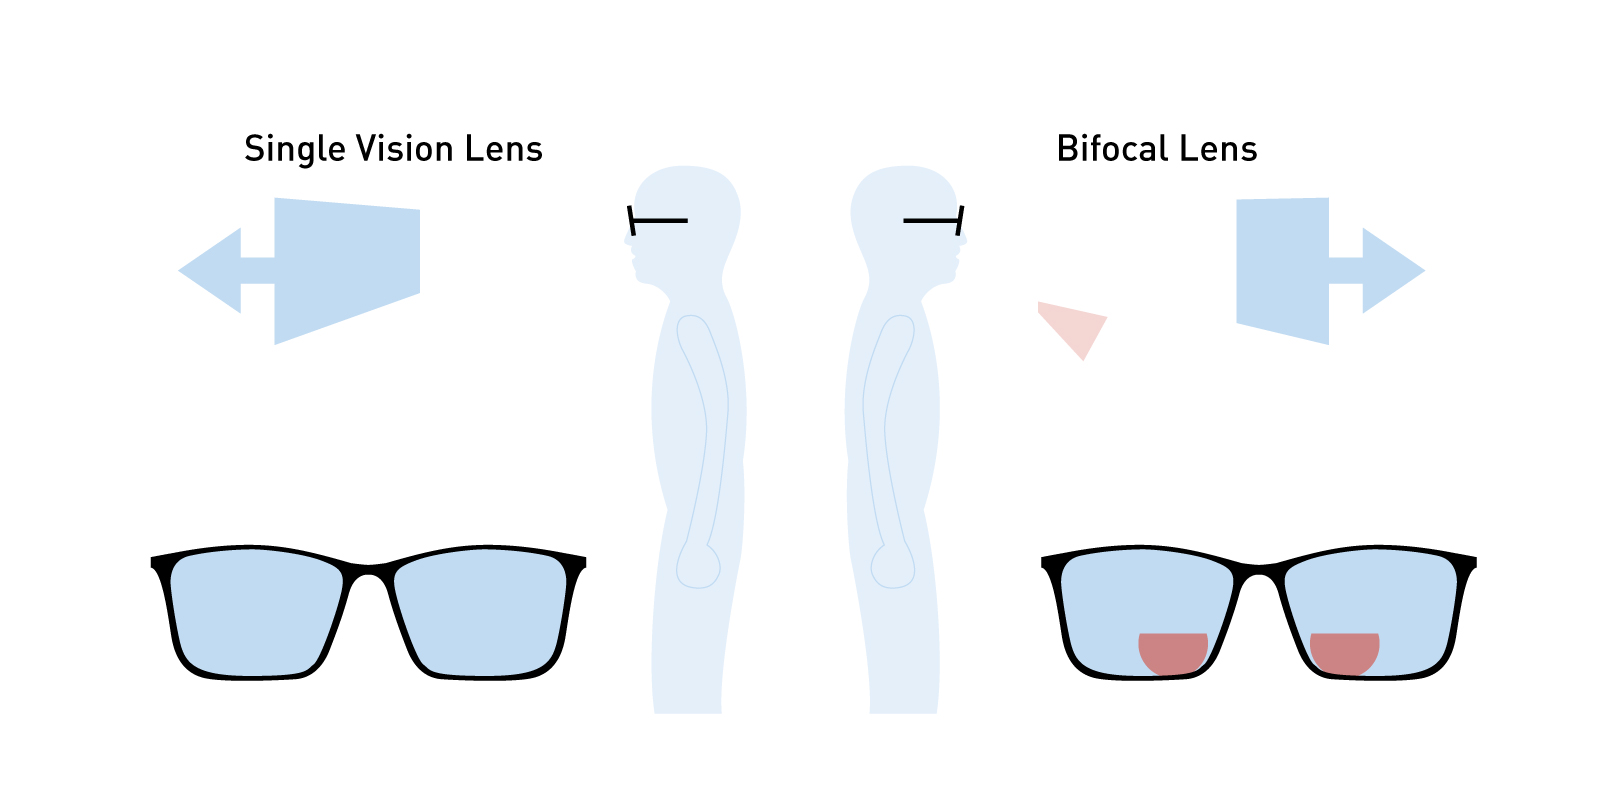 i-bifocal lens